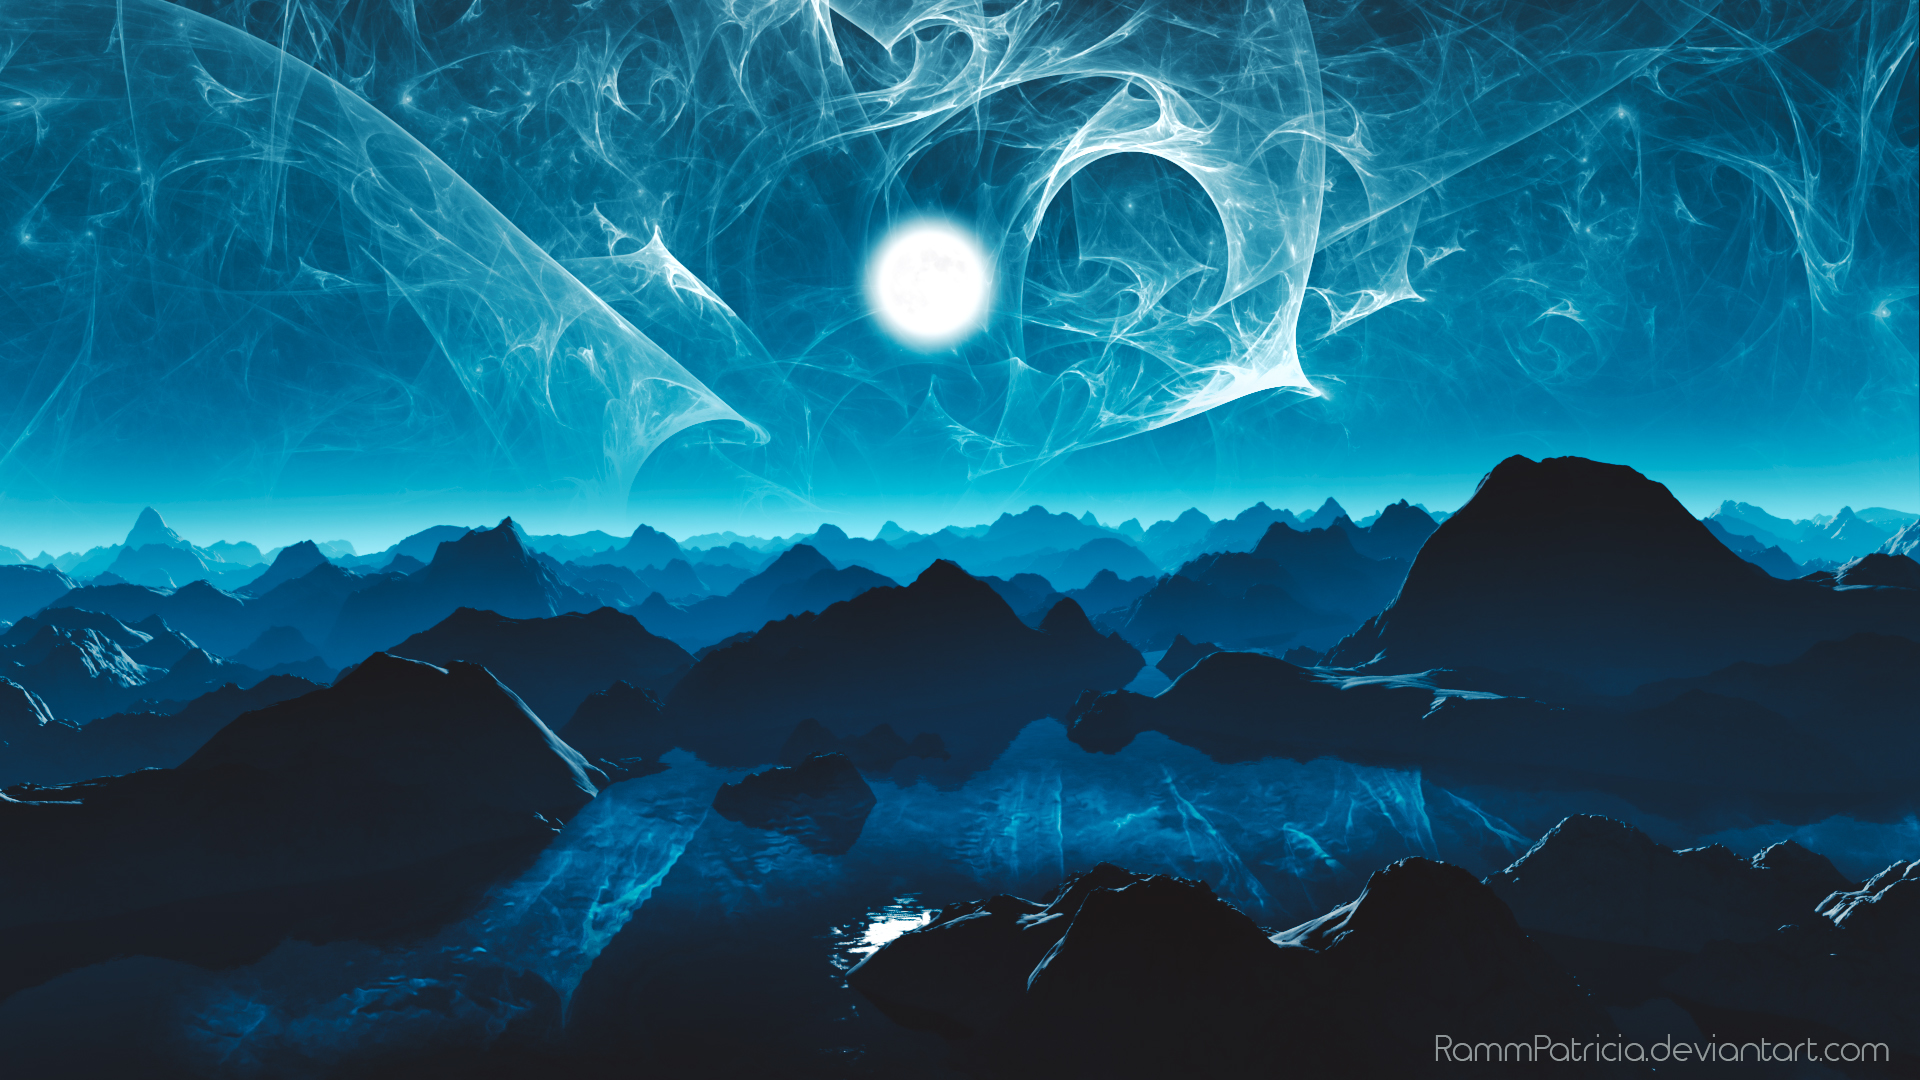 General 1920x1080 fantasy art landscape fractal mountains night Moon water reflection lake mist cyan blue digital art watermarked DeviantArt